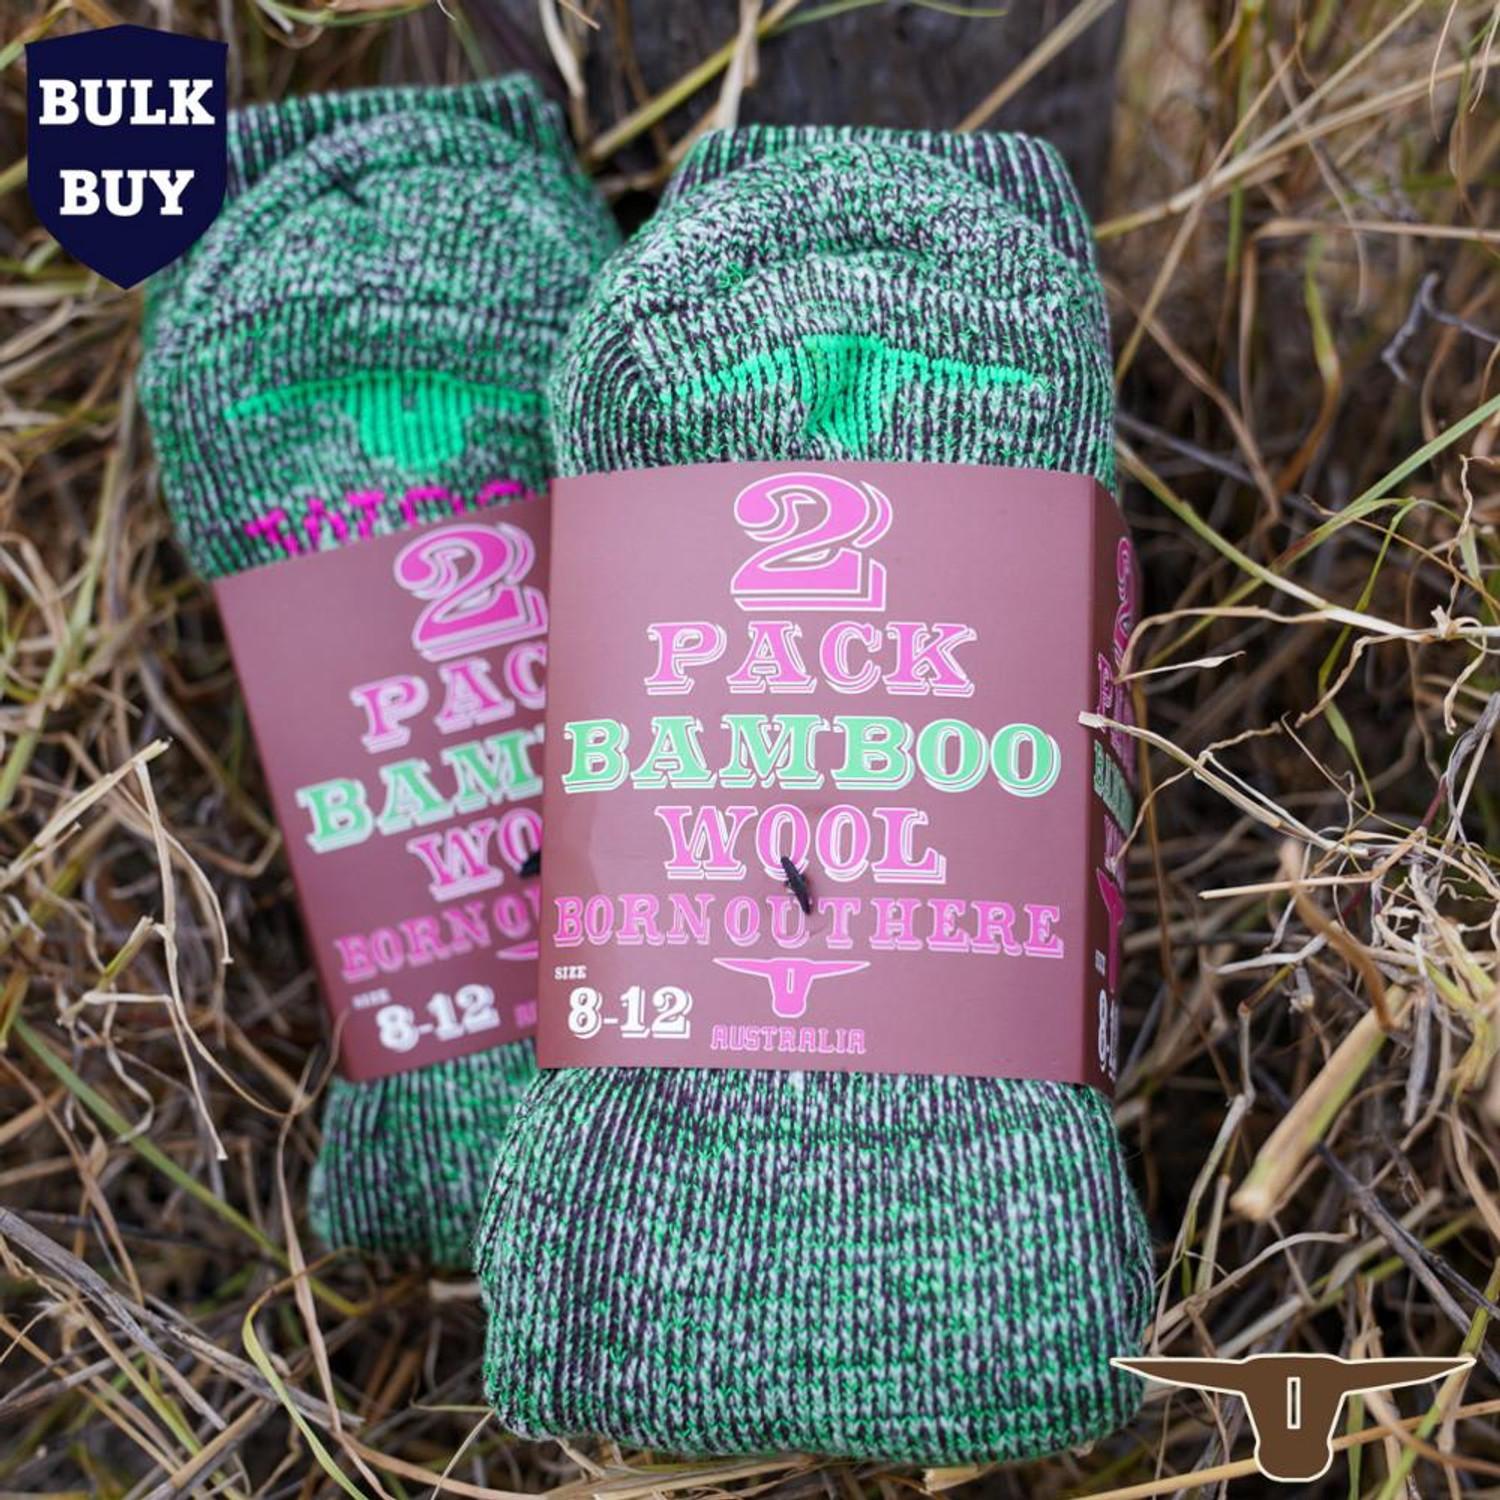  Born Out Here 2 Pack Bamboo Wool Socks (Bulk Deal Buy 4+ for $29.95 each) 